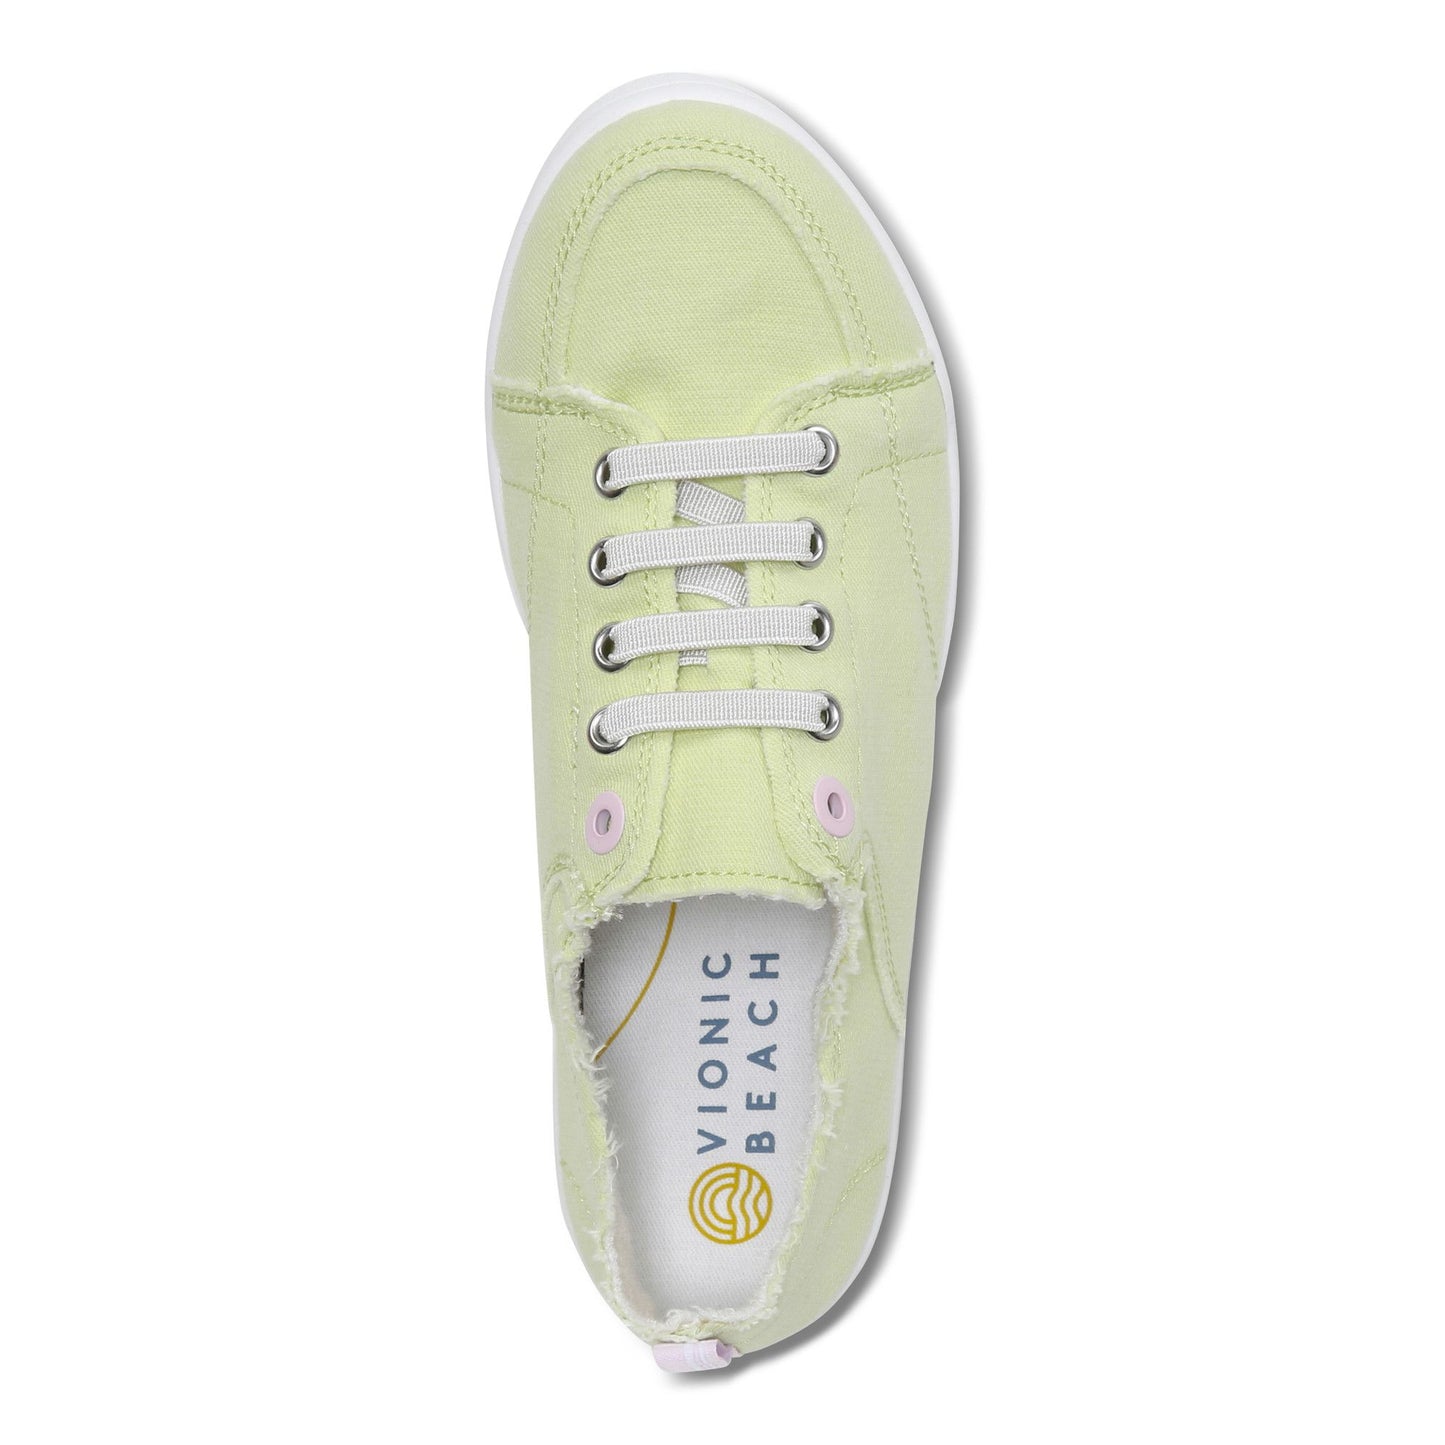 Pismo Women's Pale Lime Shoe - Vionic